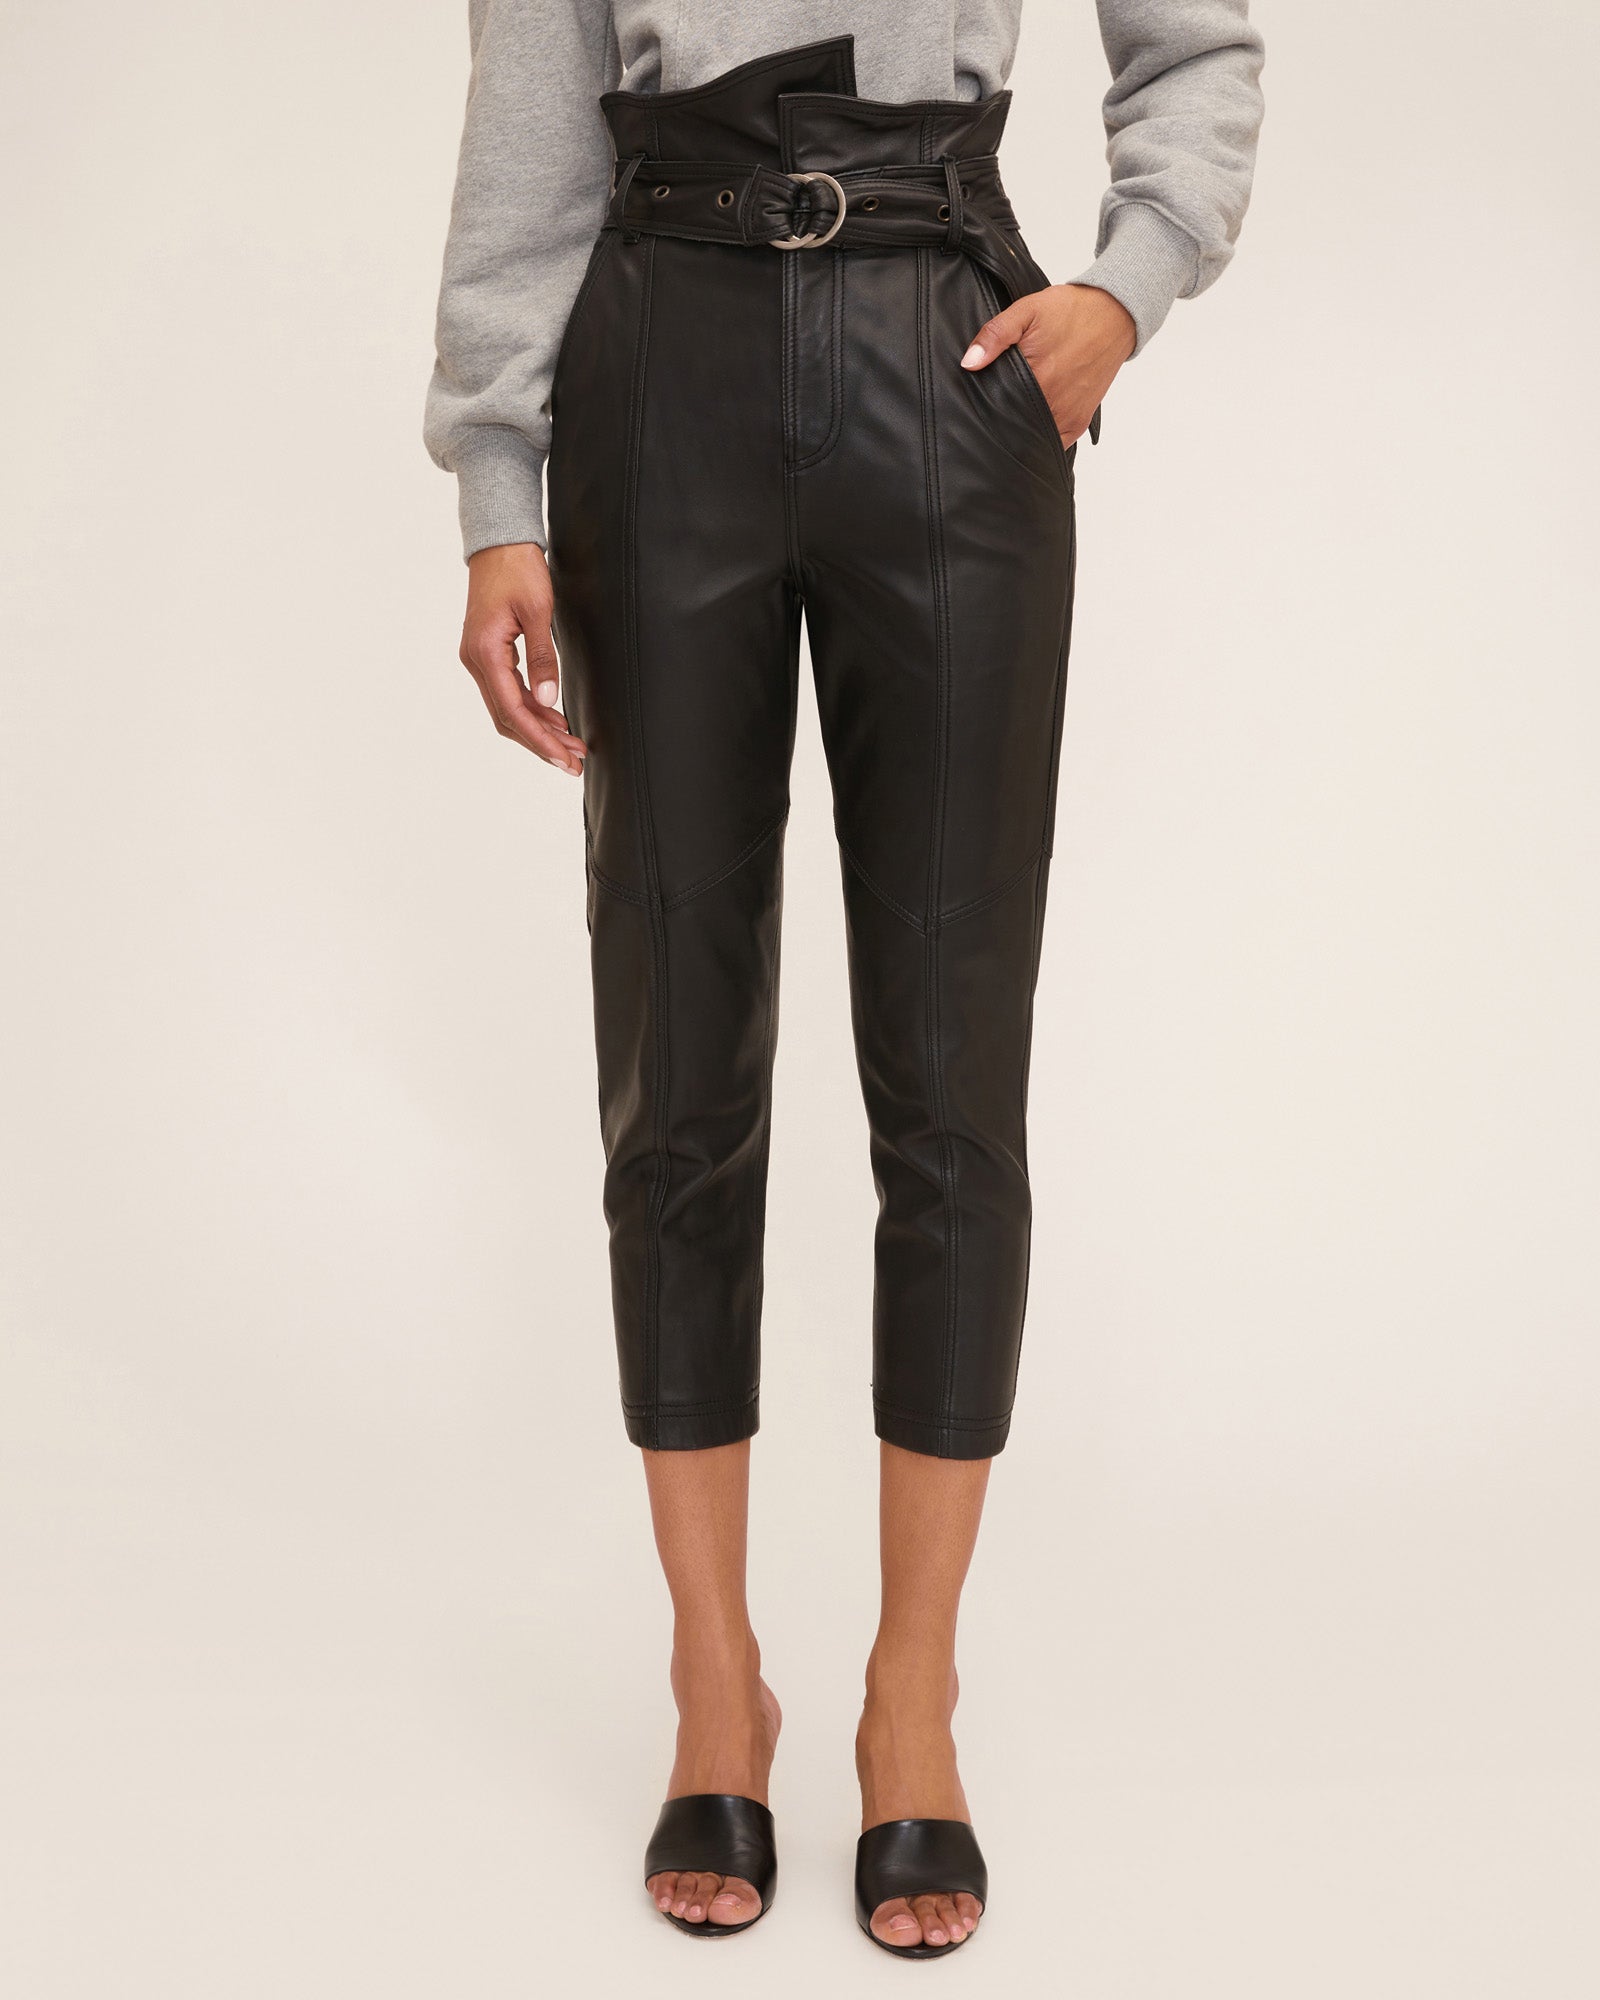 Anniston Leather Pant in WEBB | | WEBB MARISSA Black MARISSA